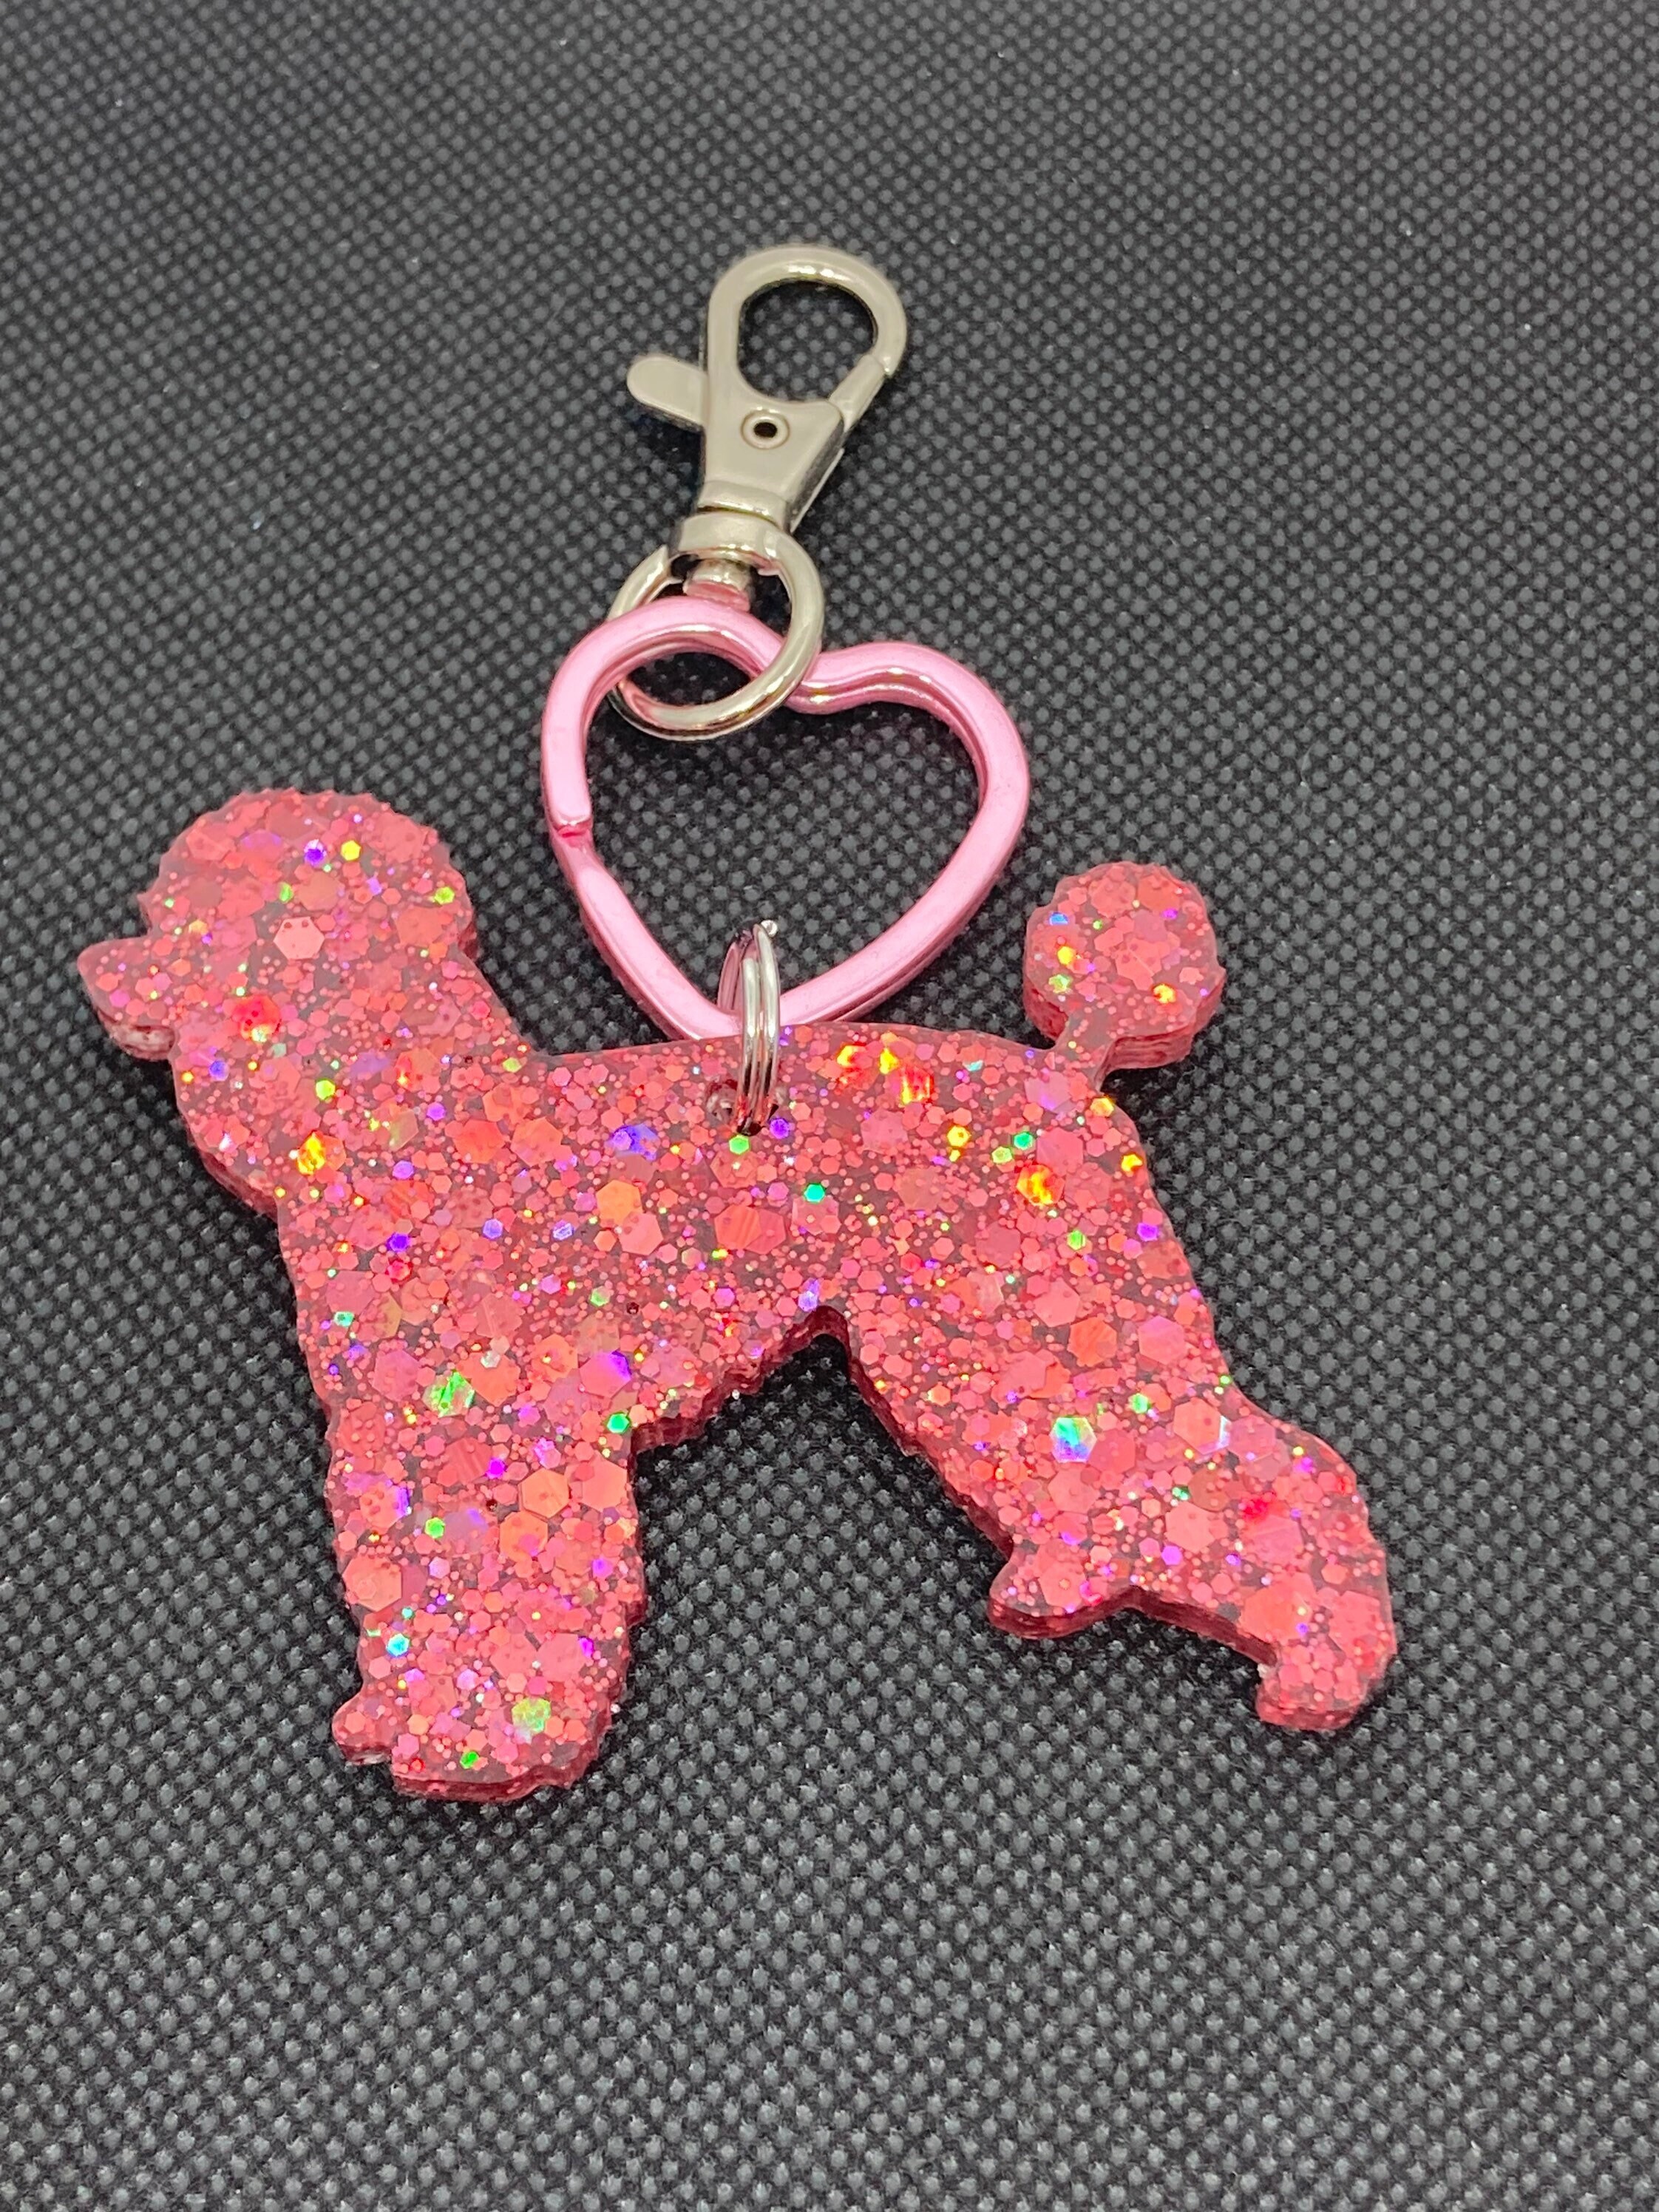 Poodle Dog Bag Charm Keychain Purse charm Plush Pom Pom Pink